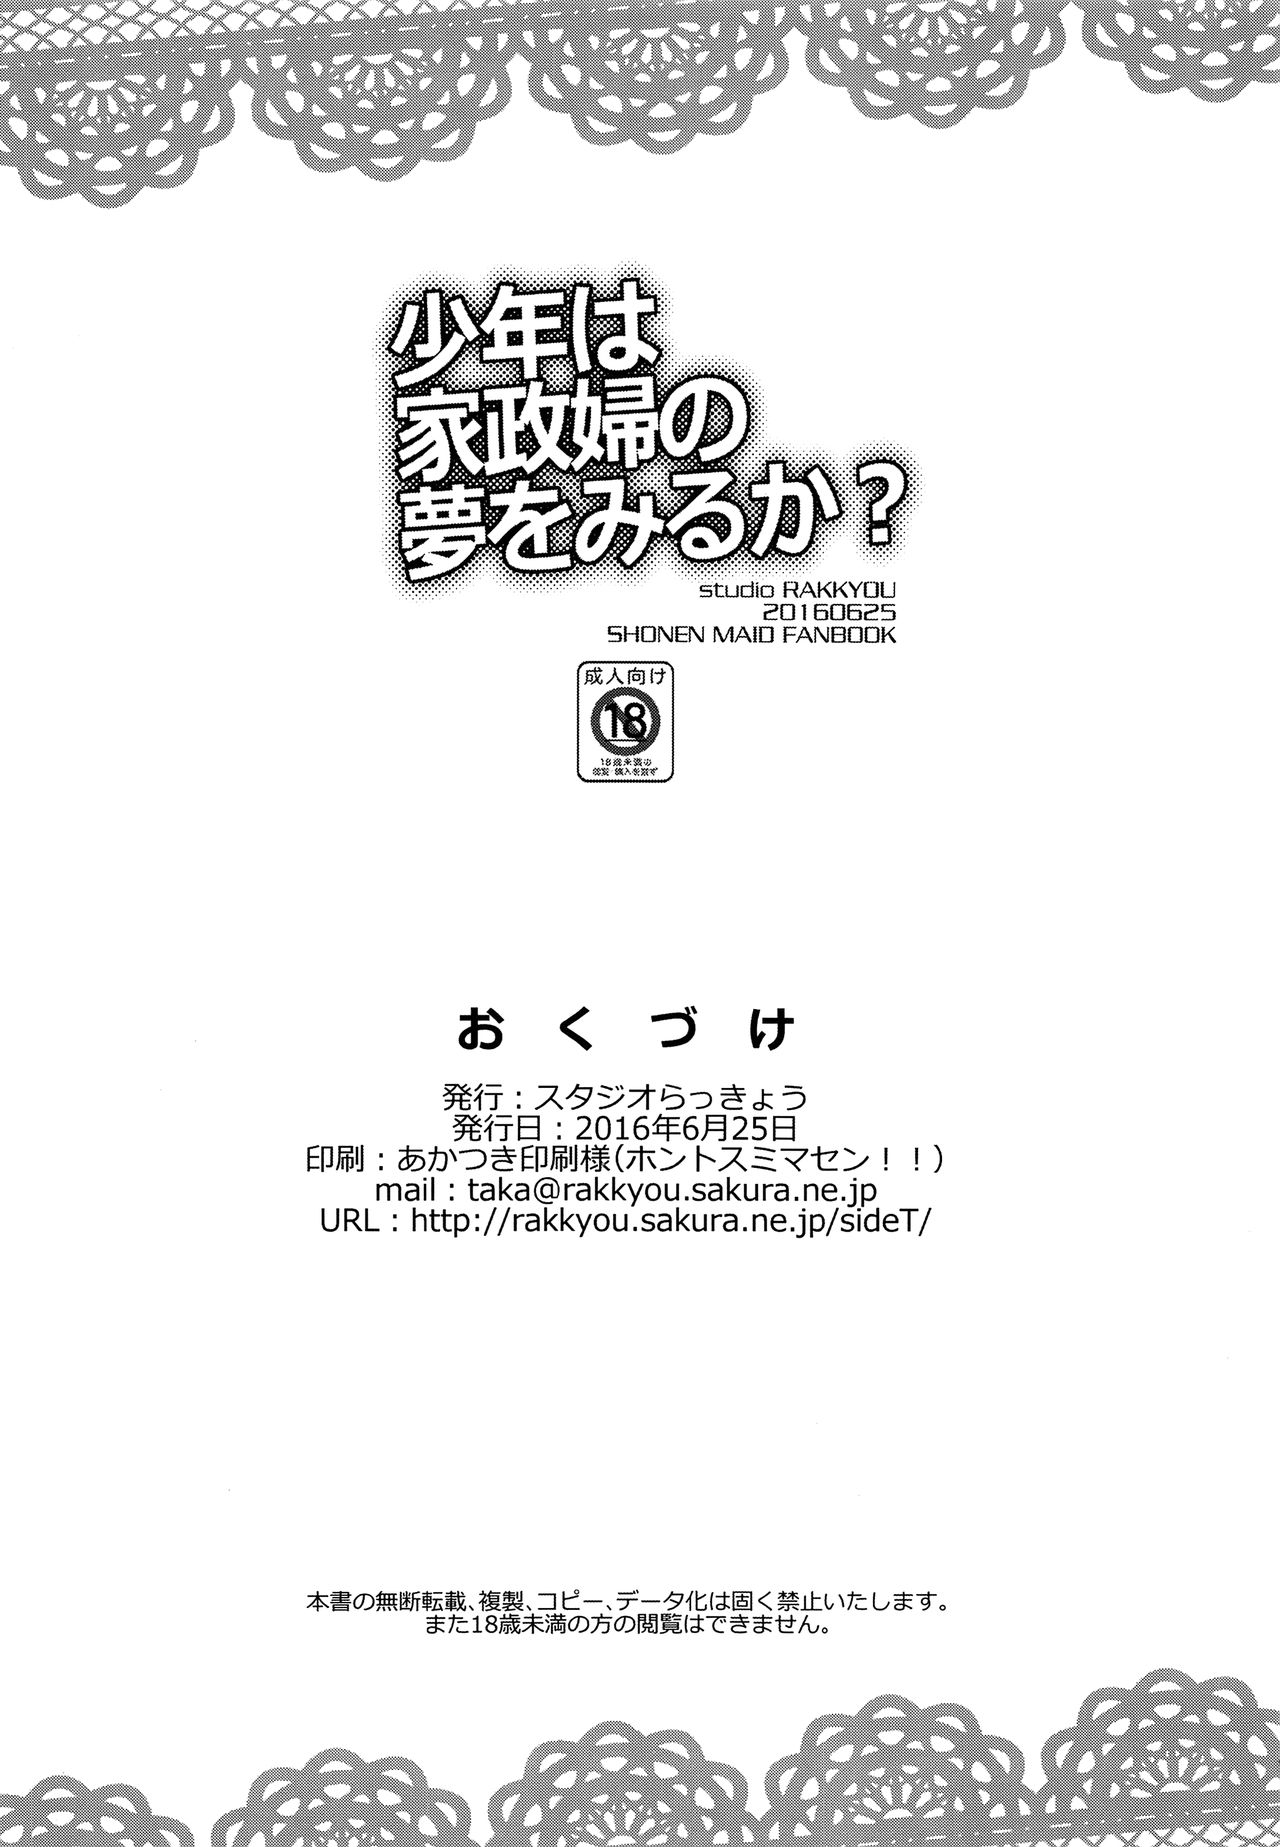 Read Shota Scratch Studio Rakkyou Takase Yuu Shounen Wa